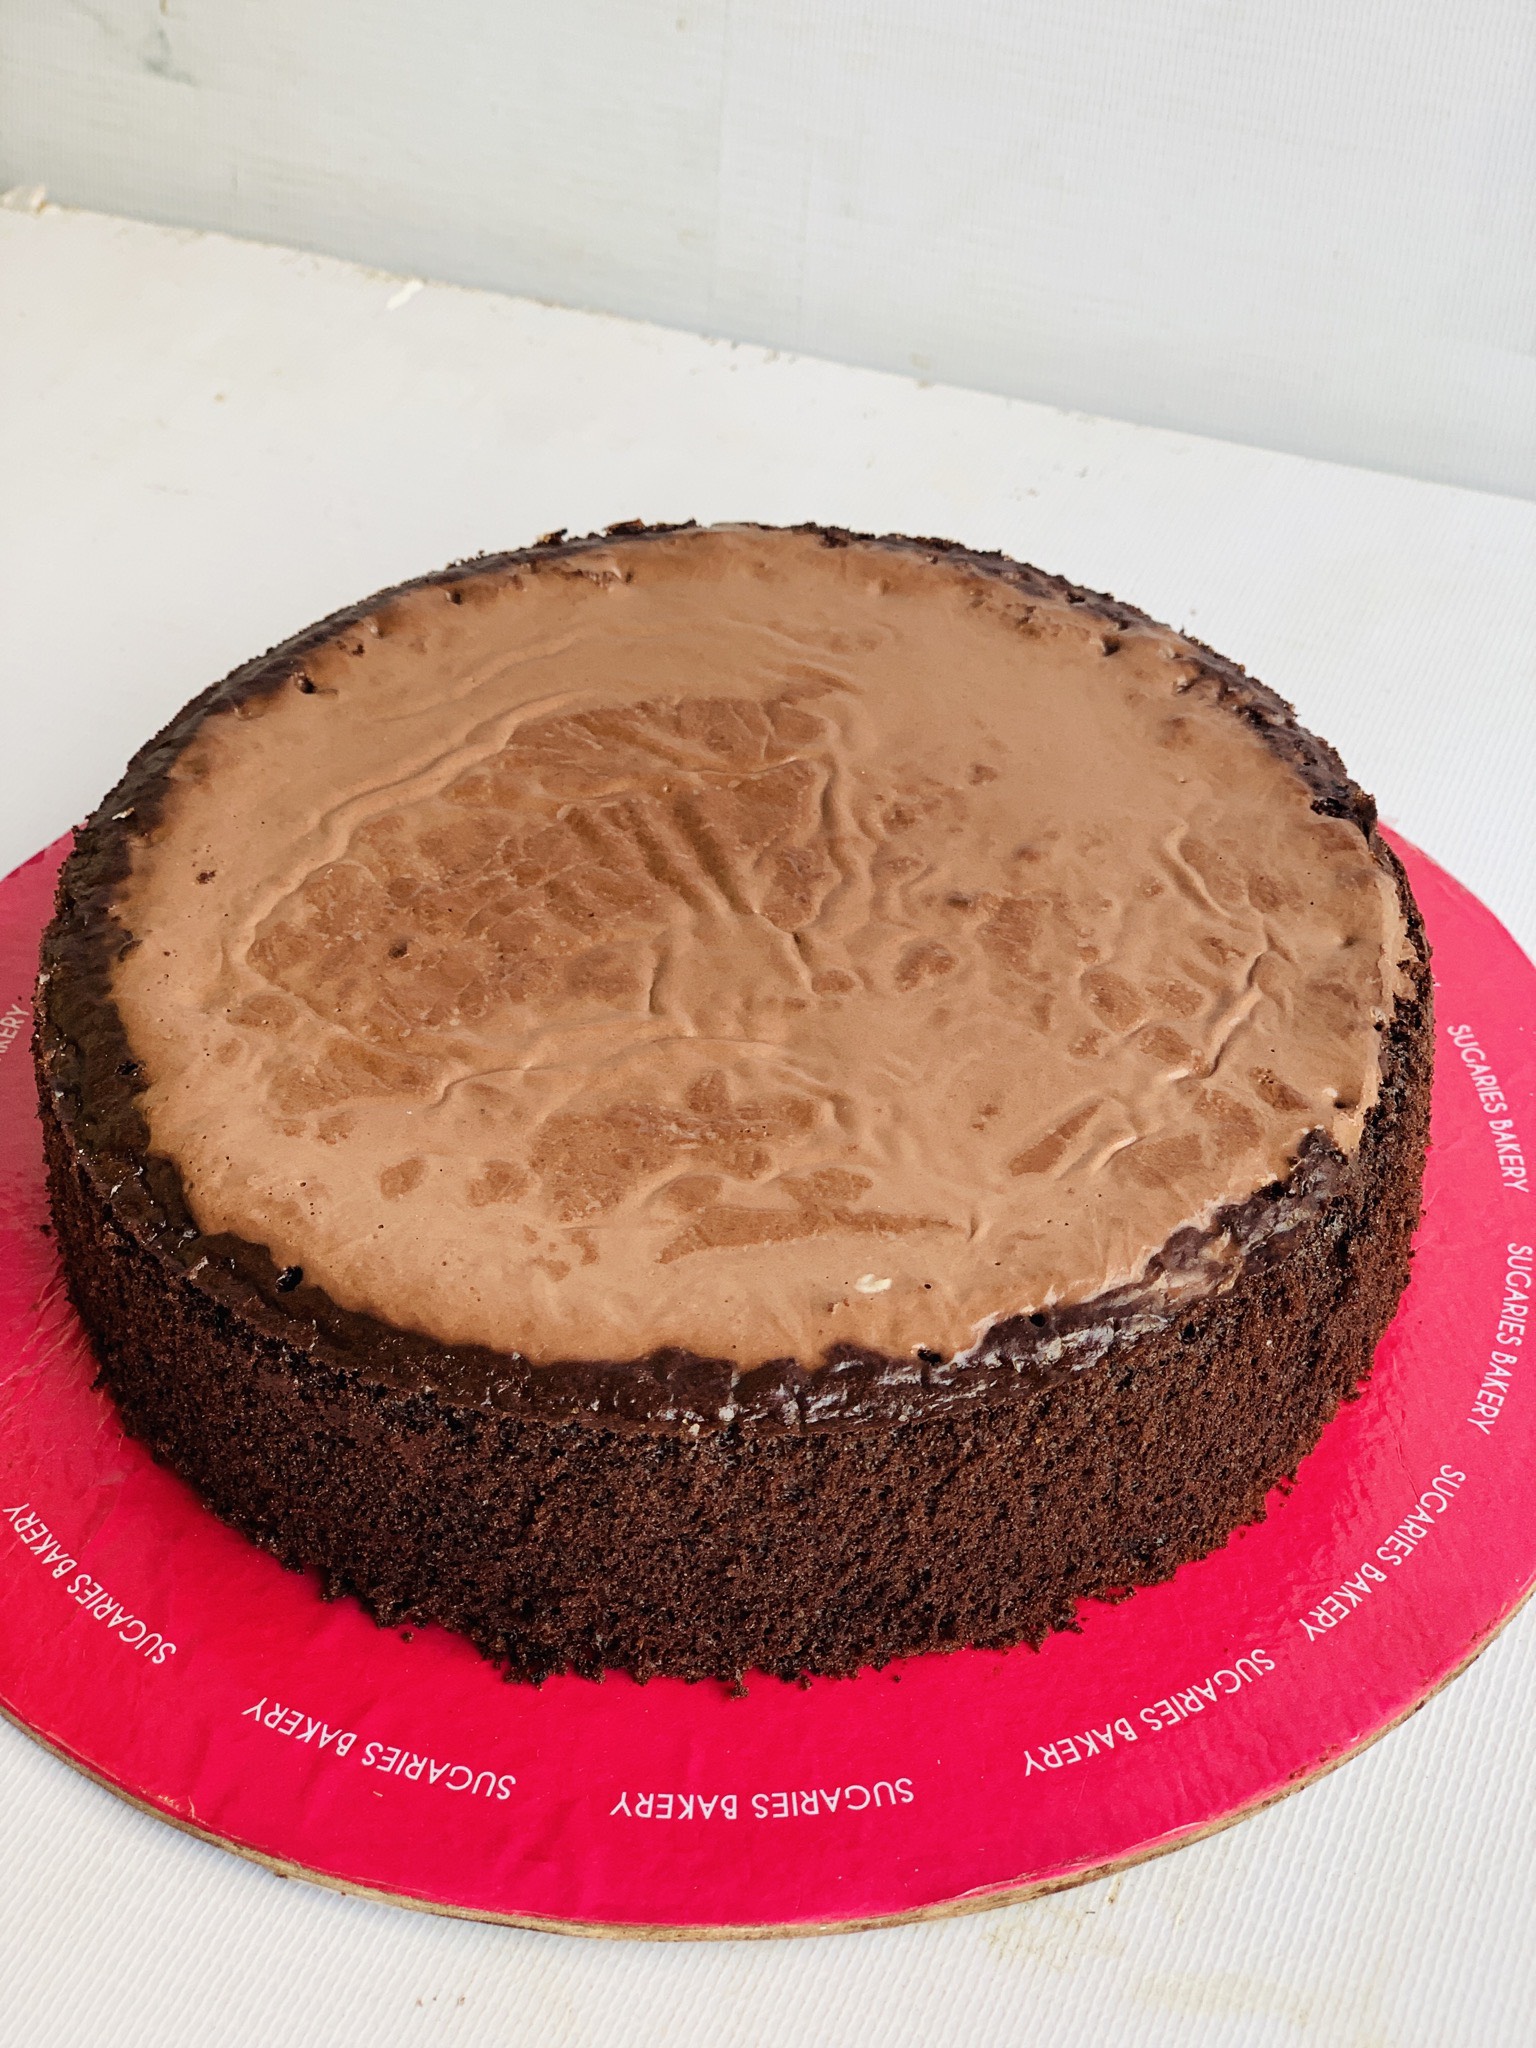 Chocolate Keto Cake Mix - King Arthur Baking Company